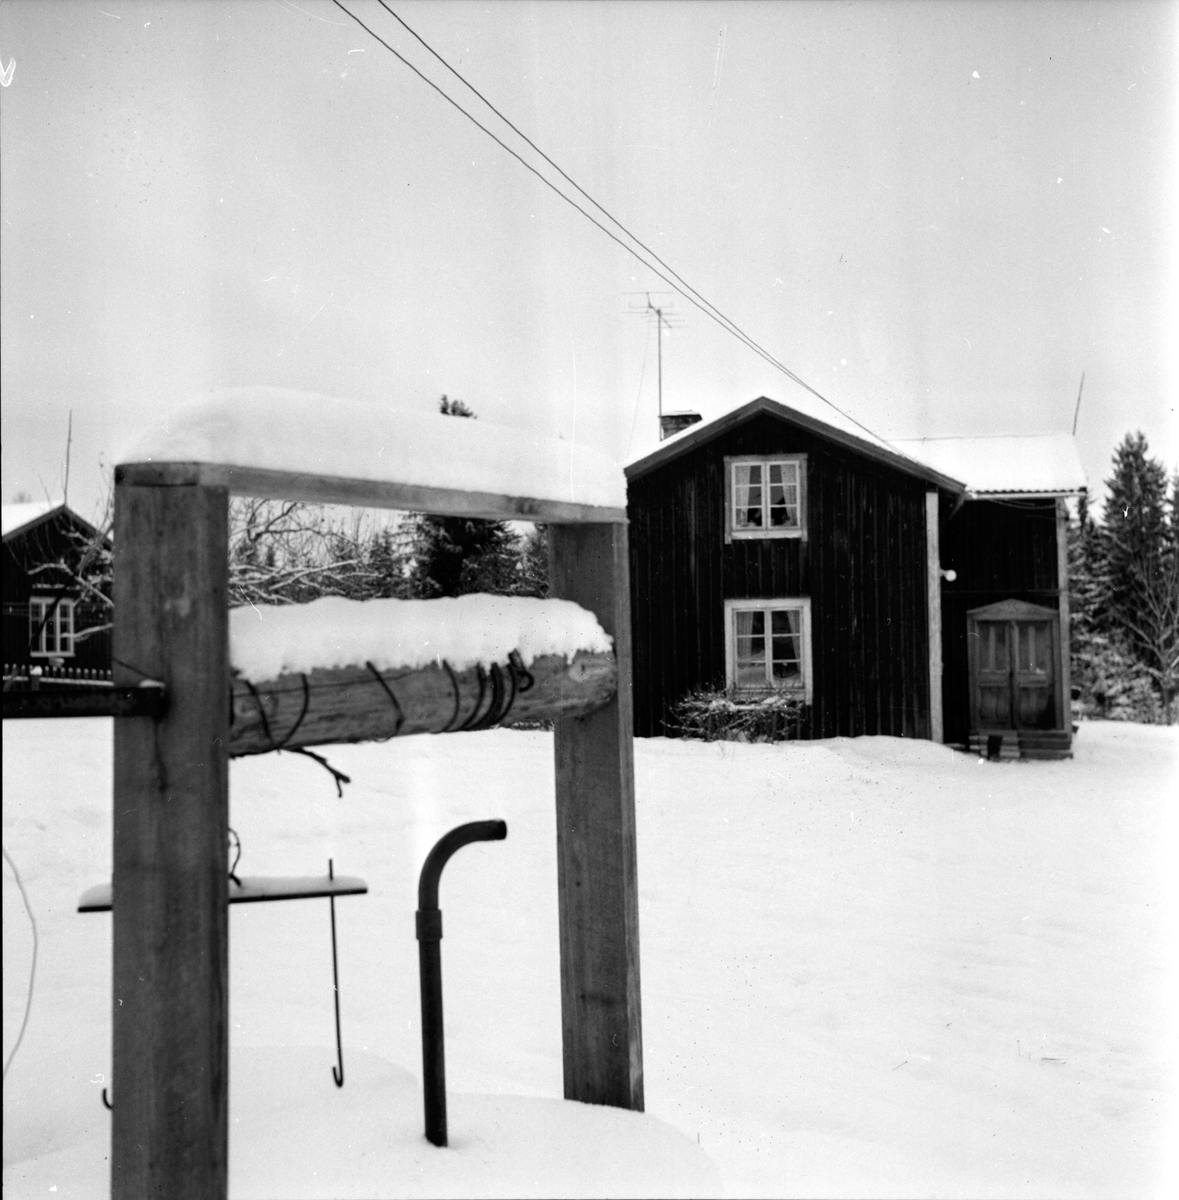 Blybergsbo, hus i vinterlandskap.